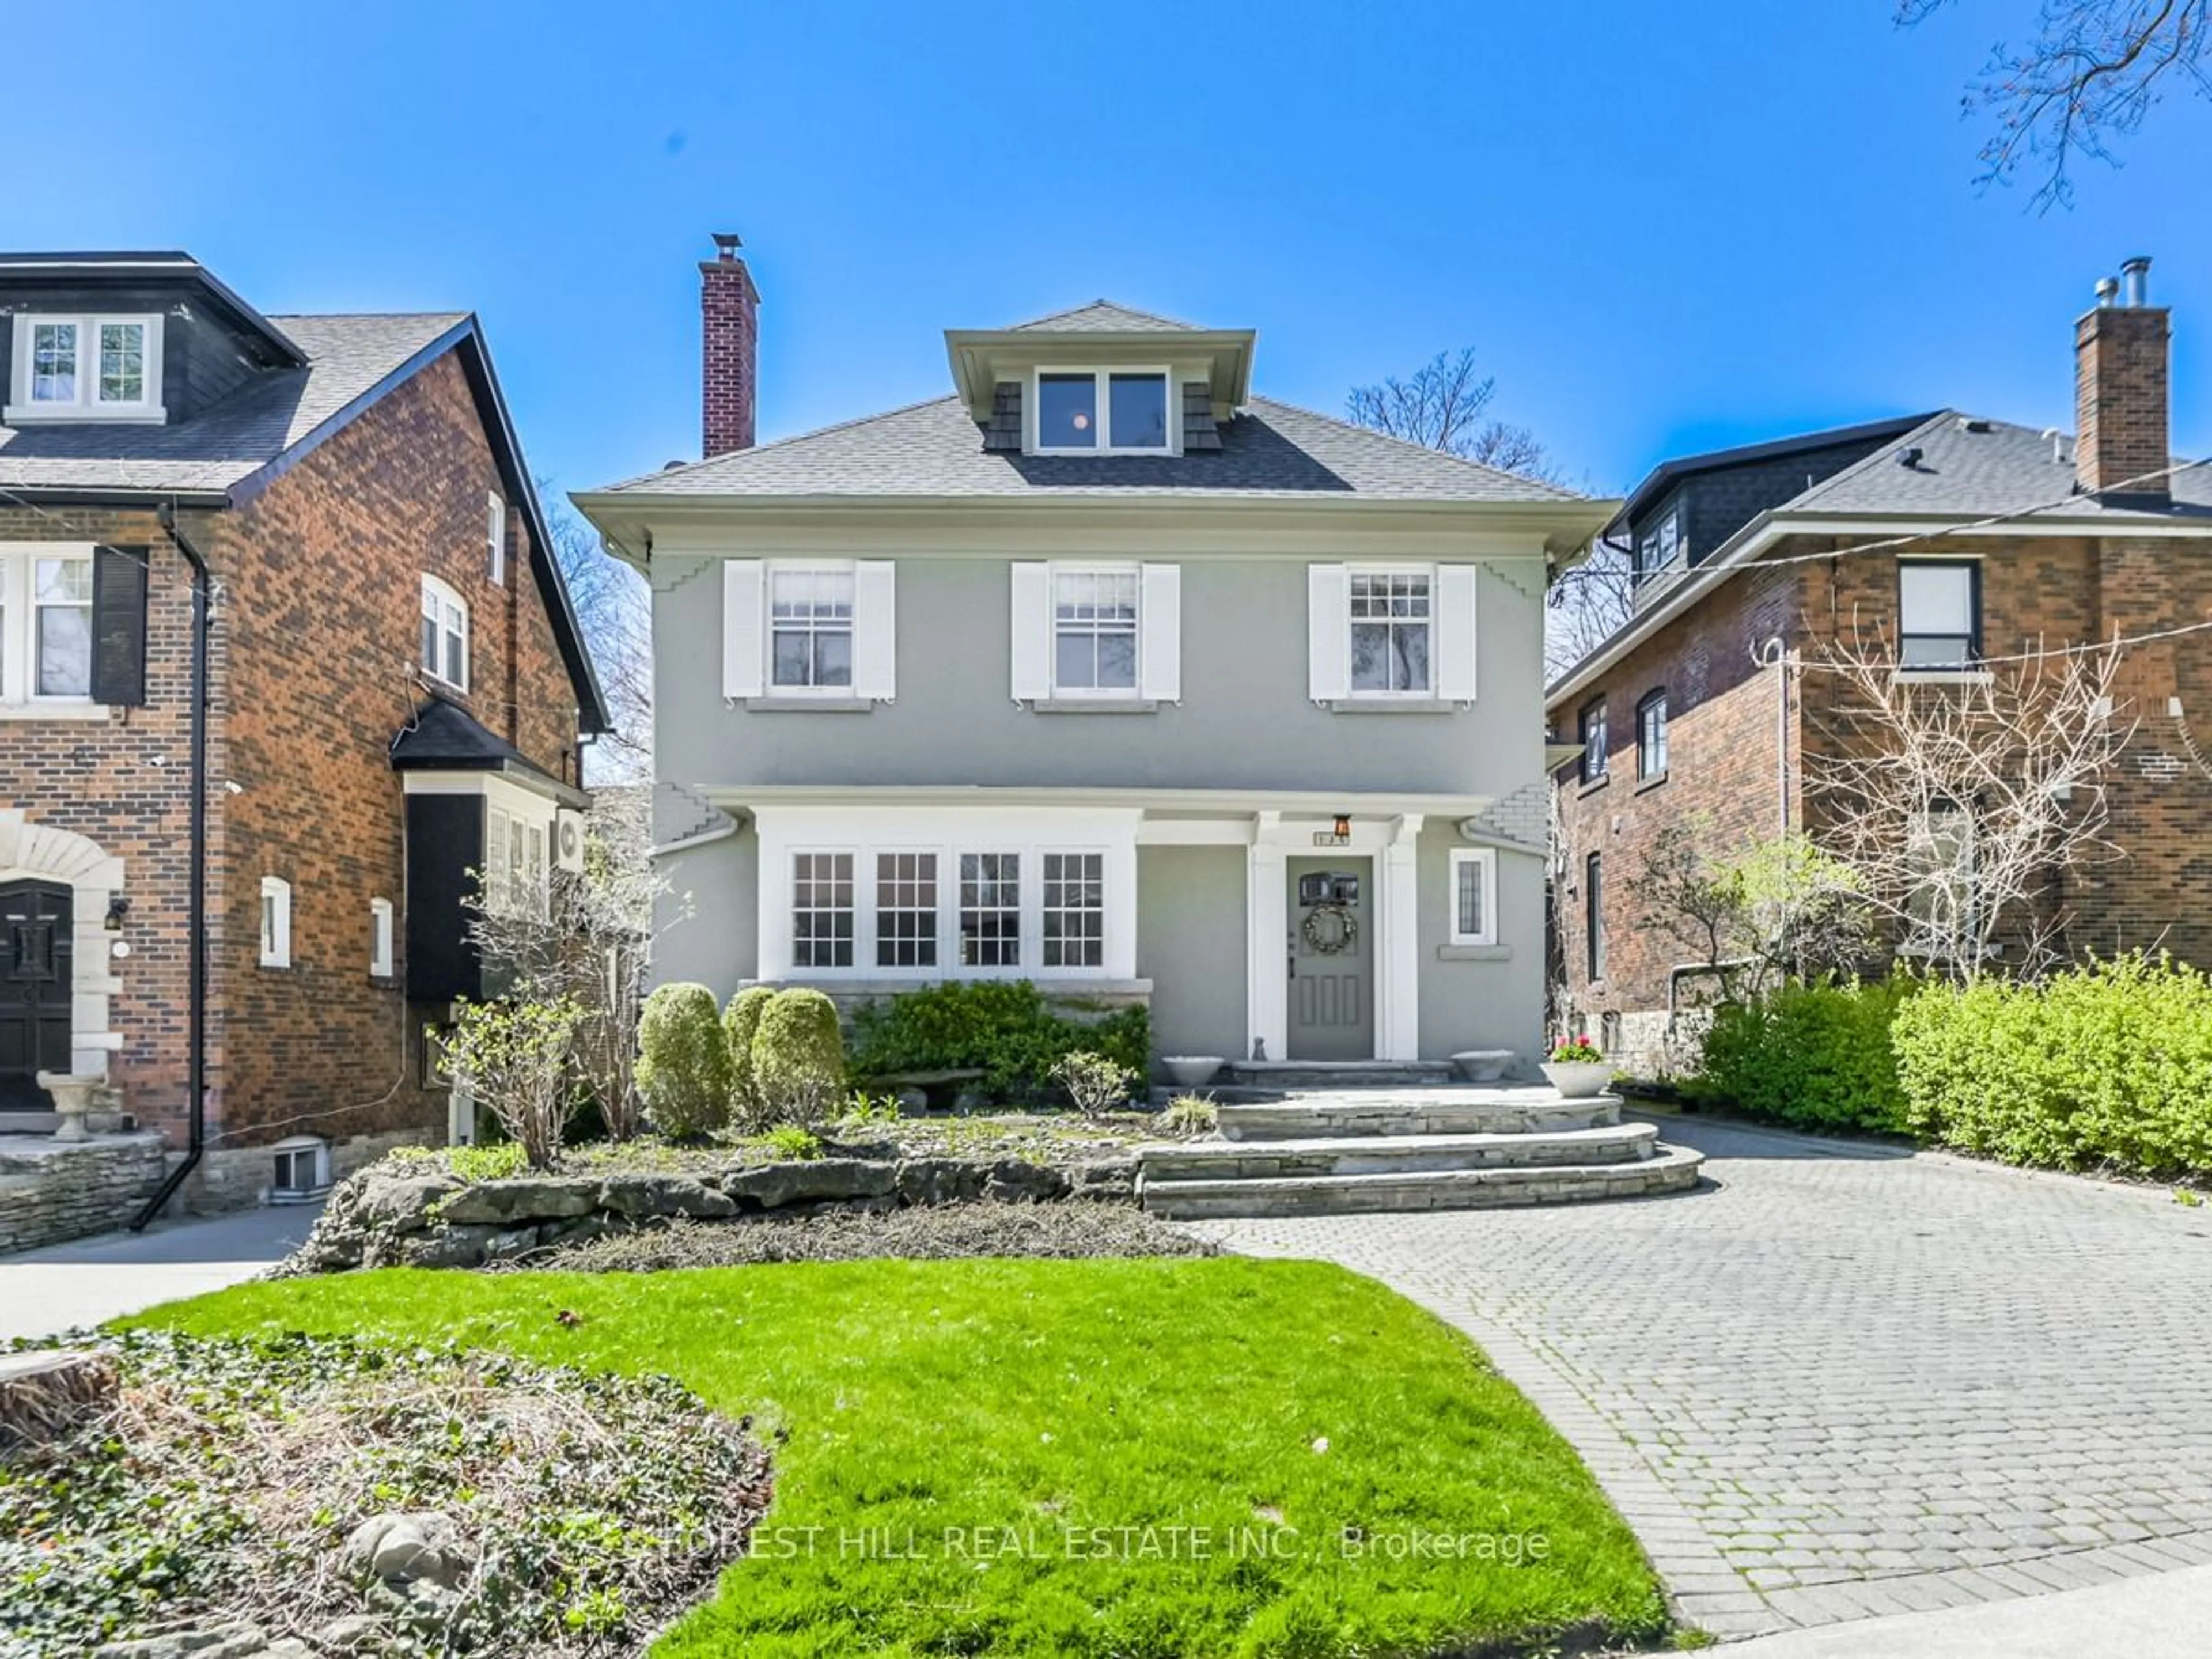 Home with brick exterior material for 126 Highbourne Rd, Toronto Ontario M5P 2J6